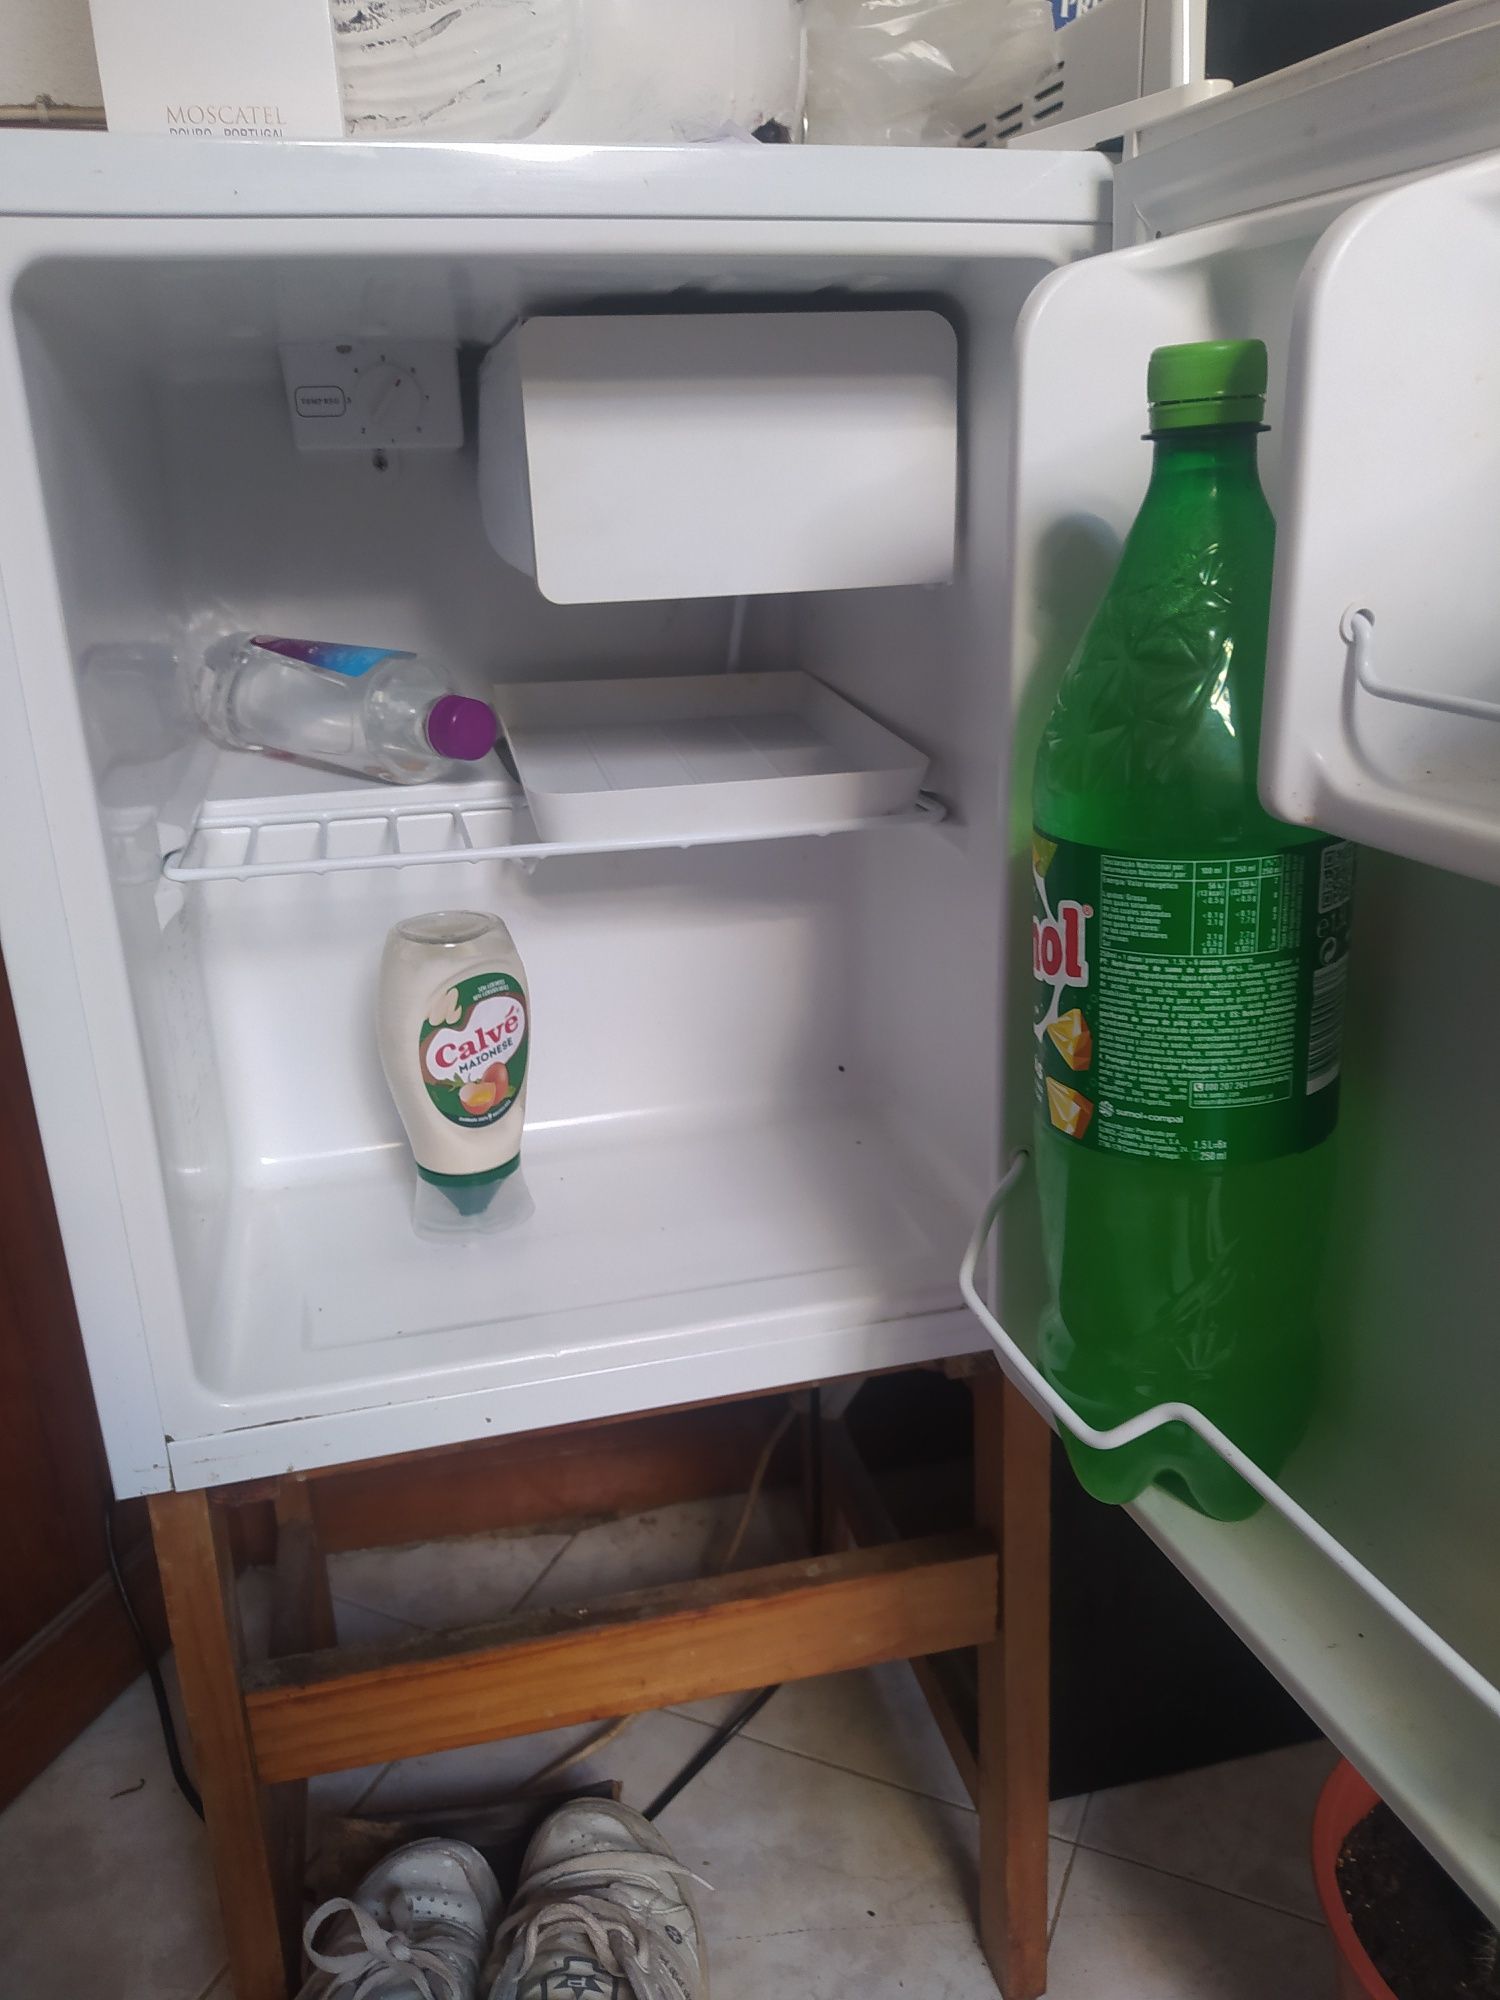 Mini frigorífico